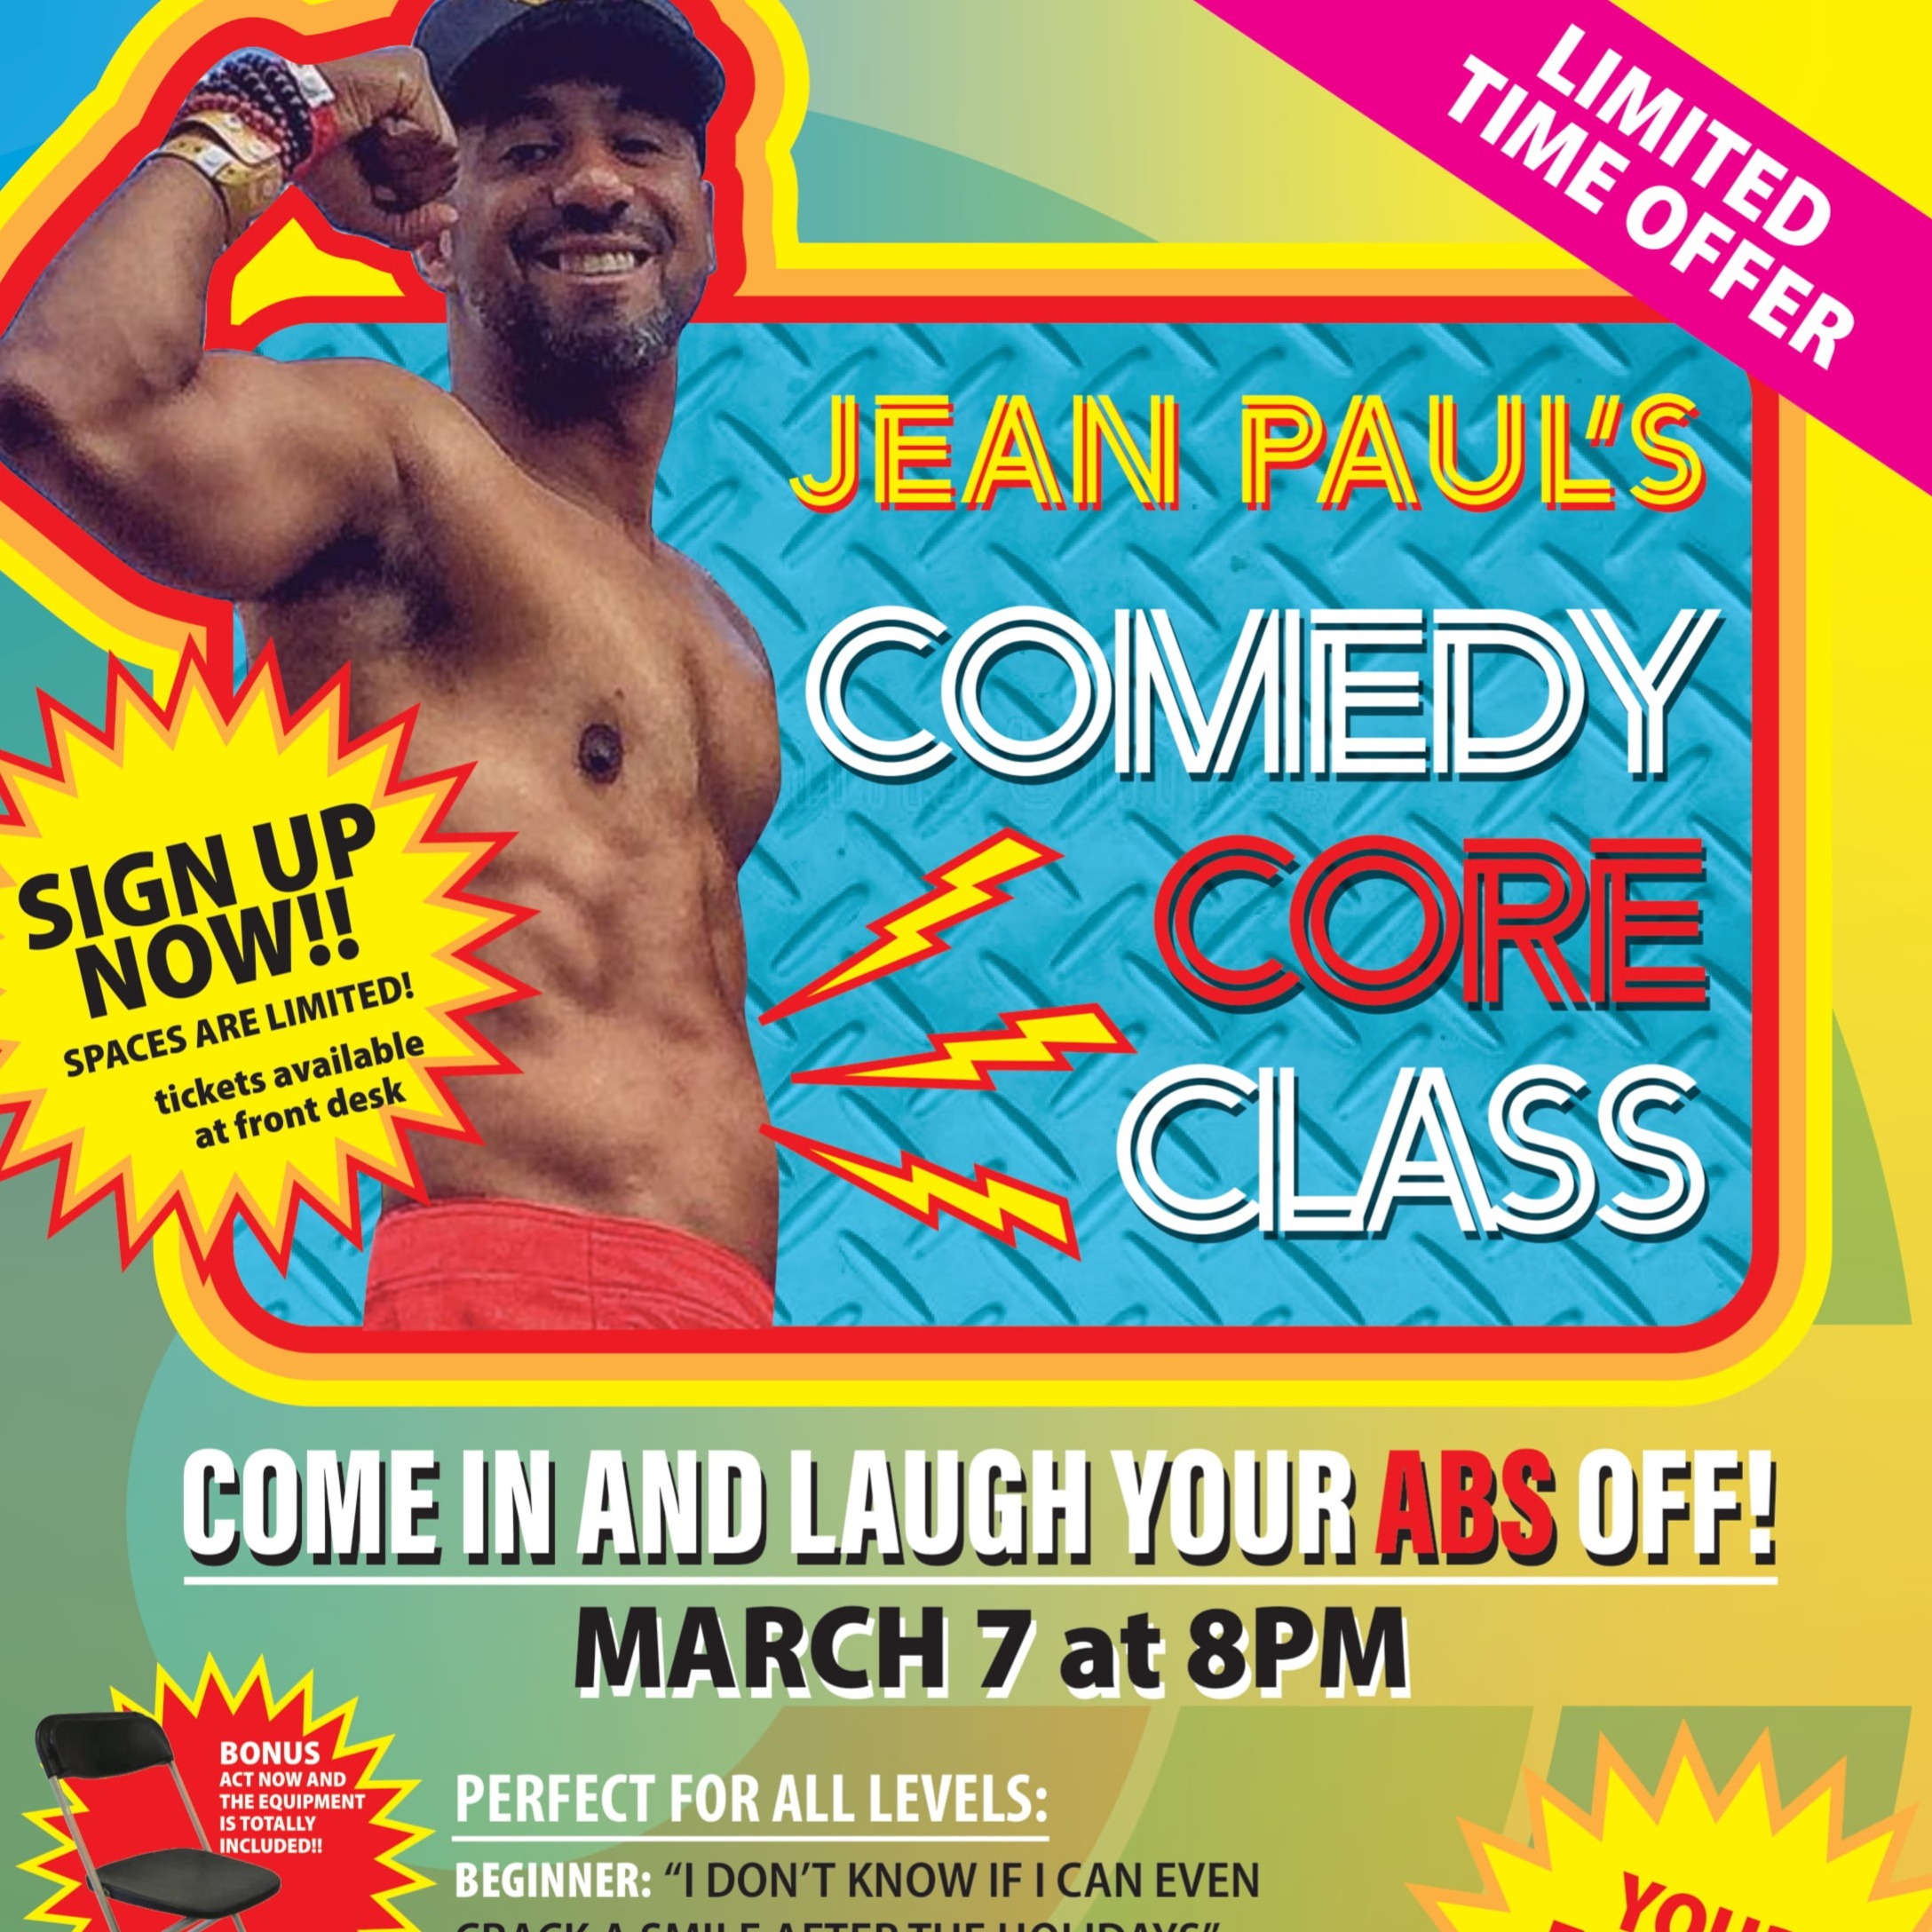 Jean Paul's Comedy Core Class 